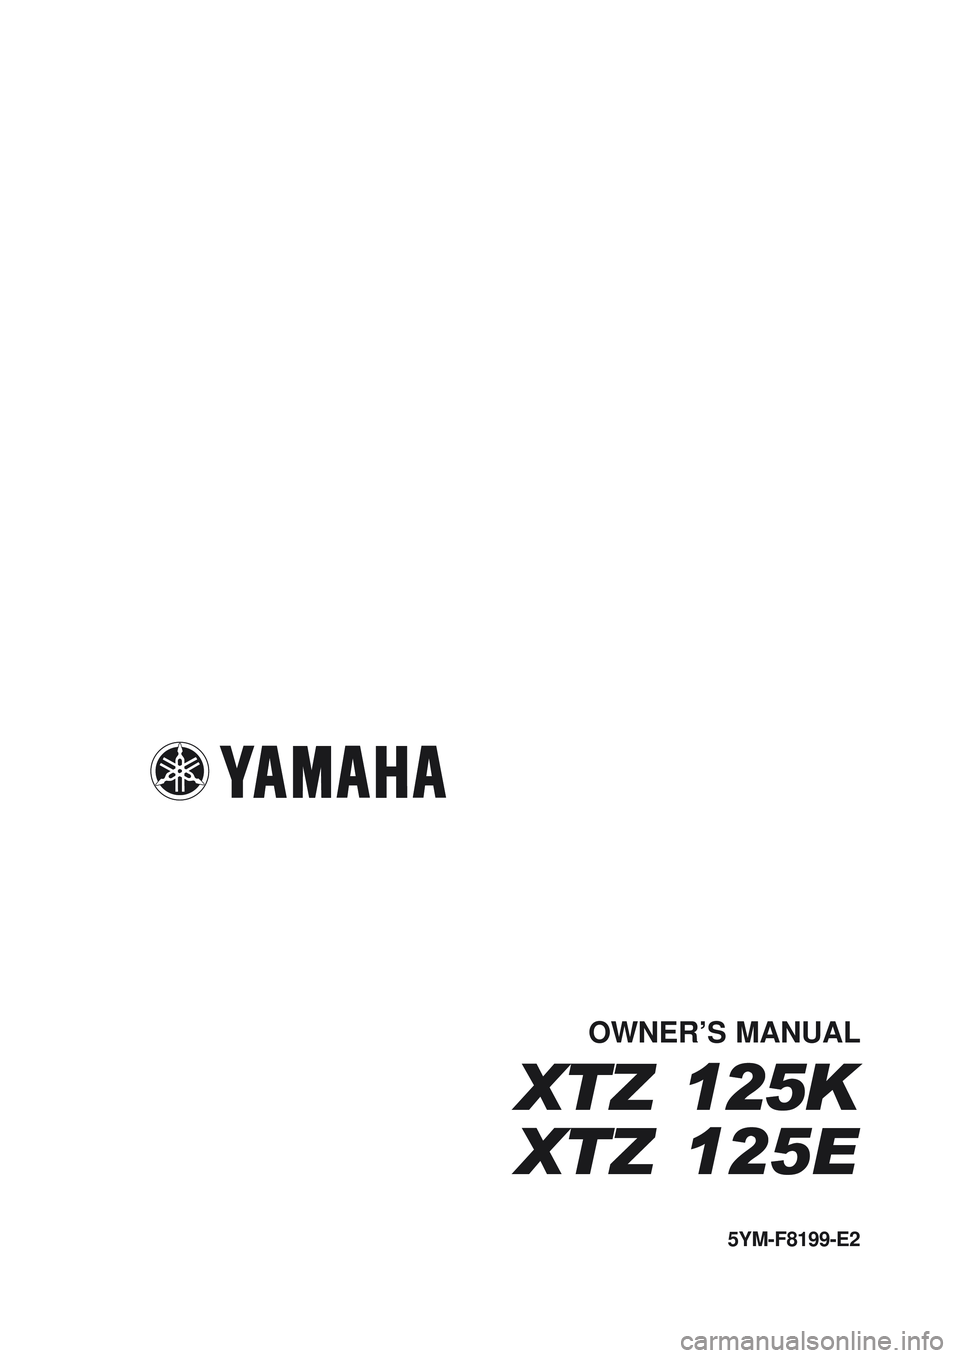 YAMAHA XTZ125 2008  Owners Manual I
I5YM-F8199-E2
OWNER’S MANUAL
XTZ 125K
XTZ 125E
5YM-F8199-E2
OWNER’S MANUAL
XTZ 125K
XTZ 125E 